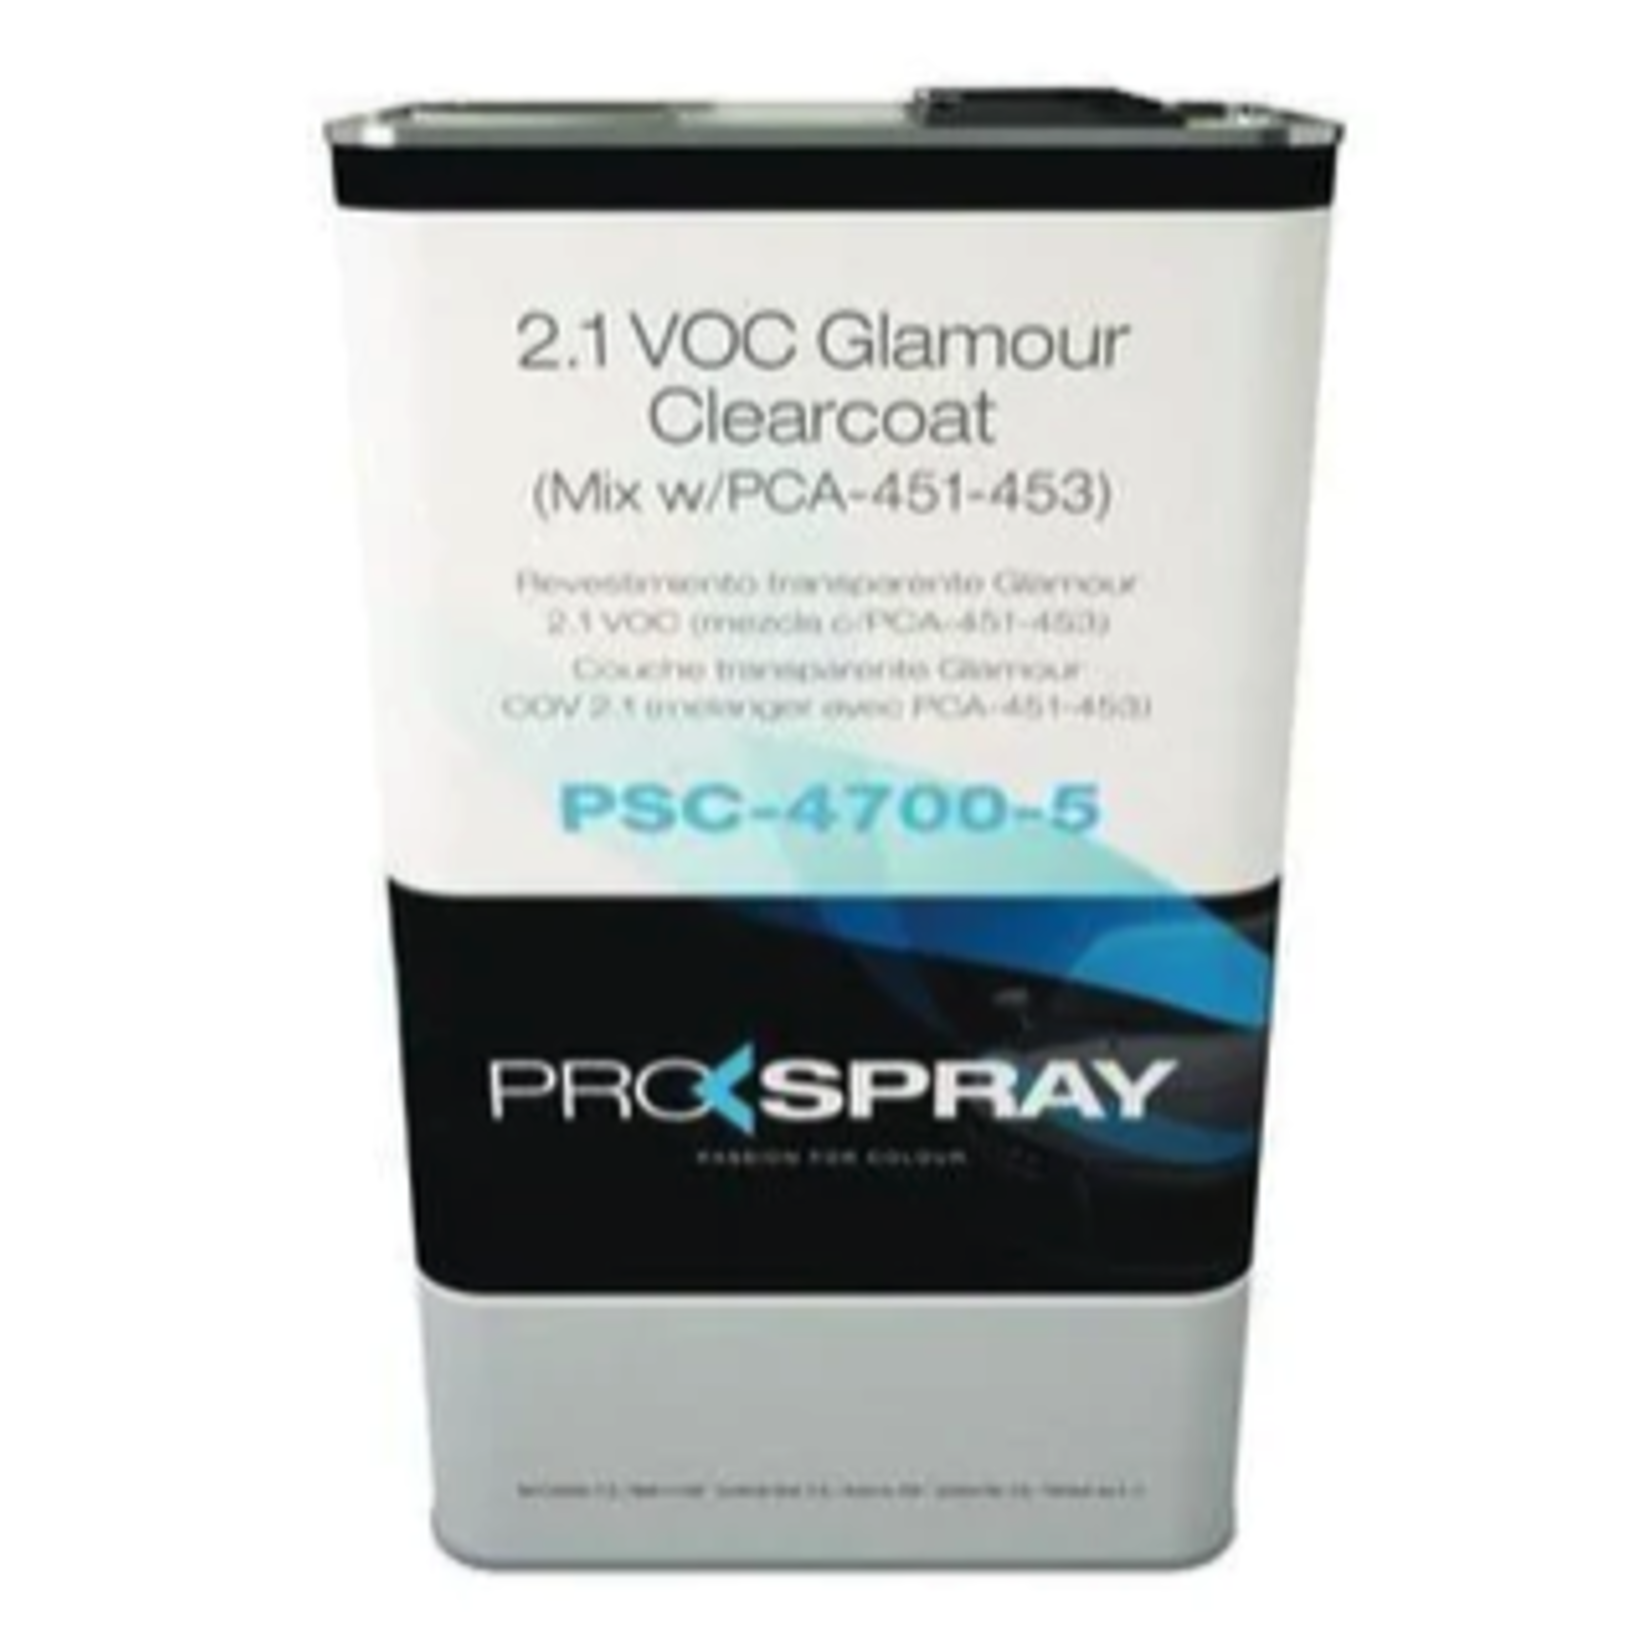 PRO-SPRAY PRO-SPRAY 5L Glamour 2.1 VOC Clearcoat EACH